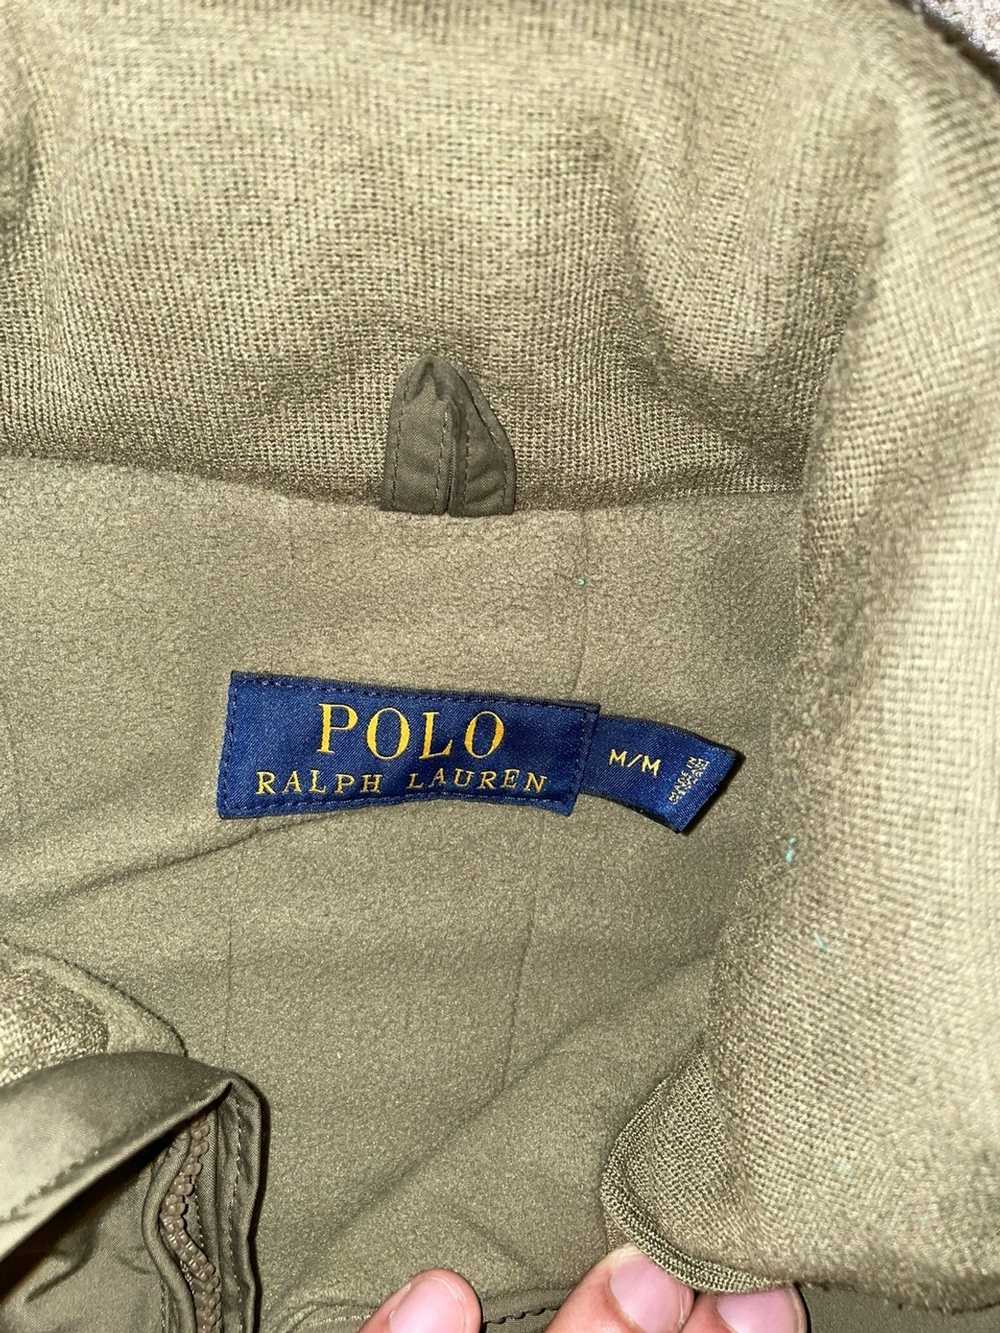 Polo Ralph Lauren Polo Ralph Lauren - image 2